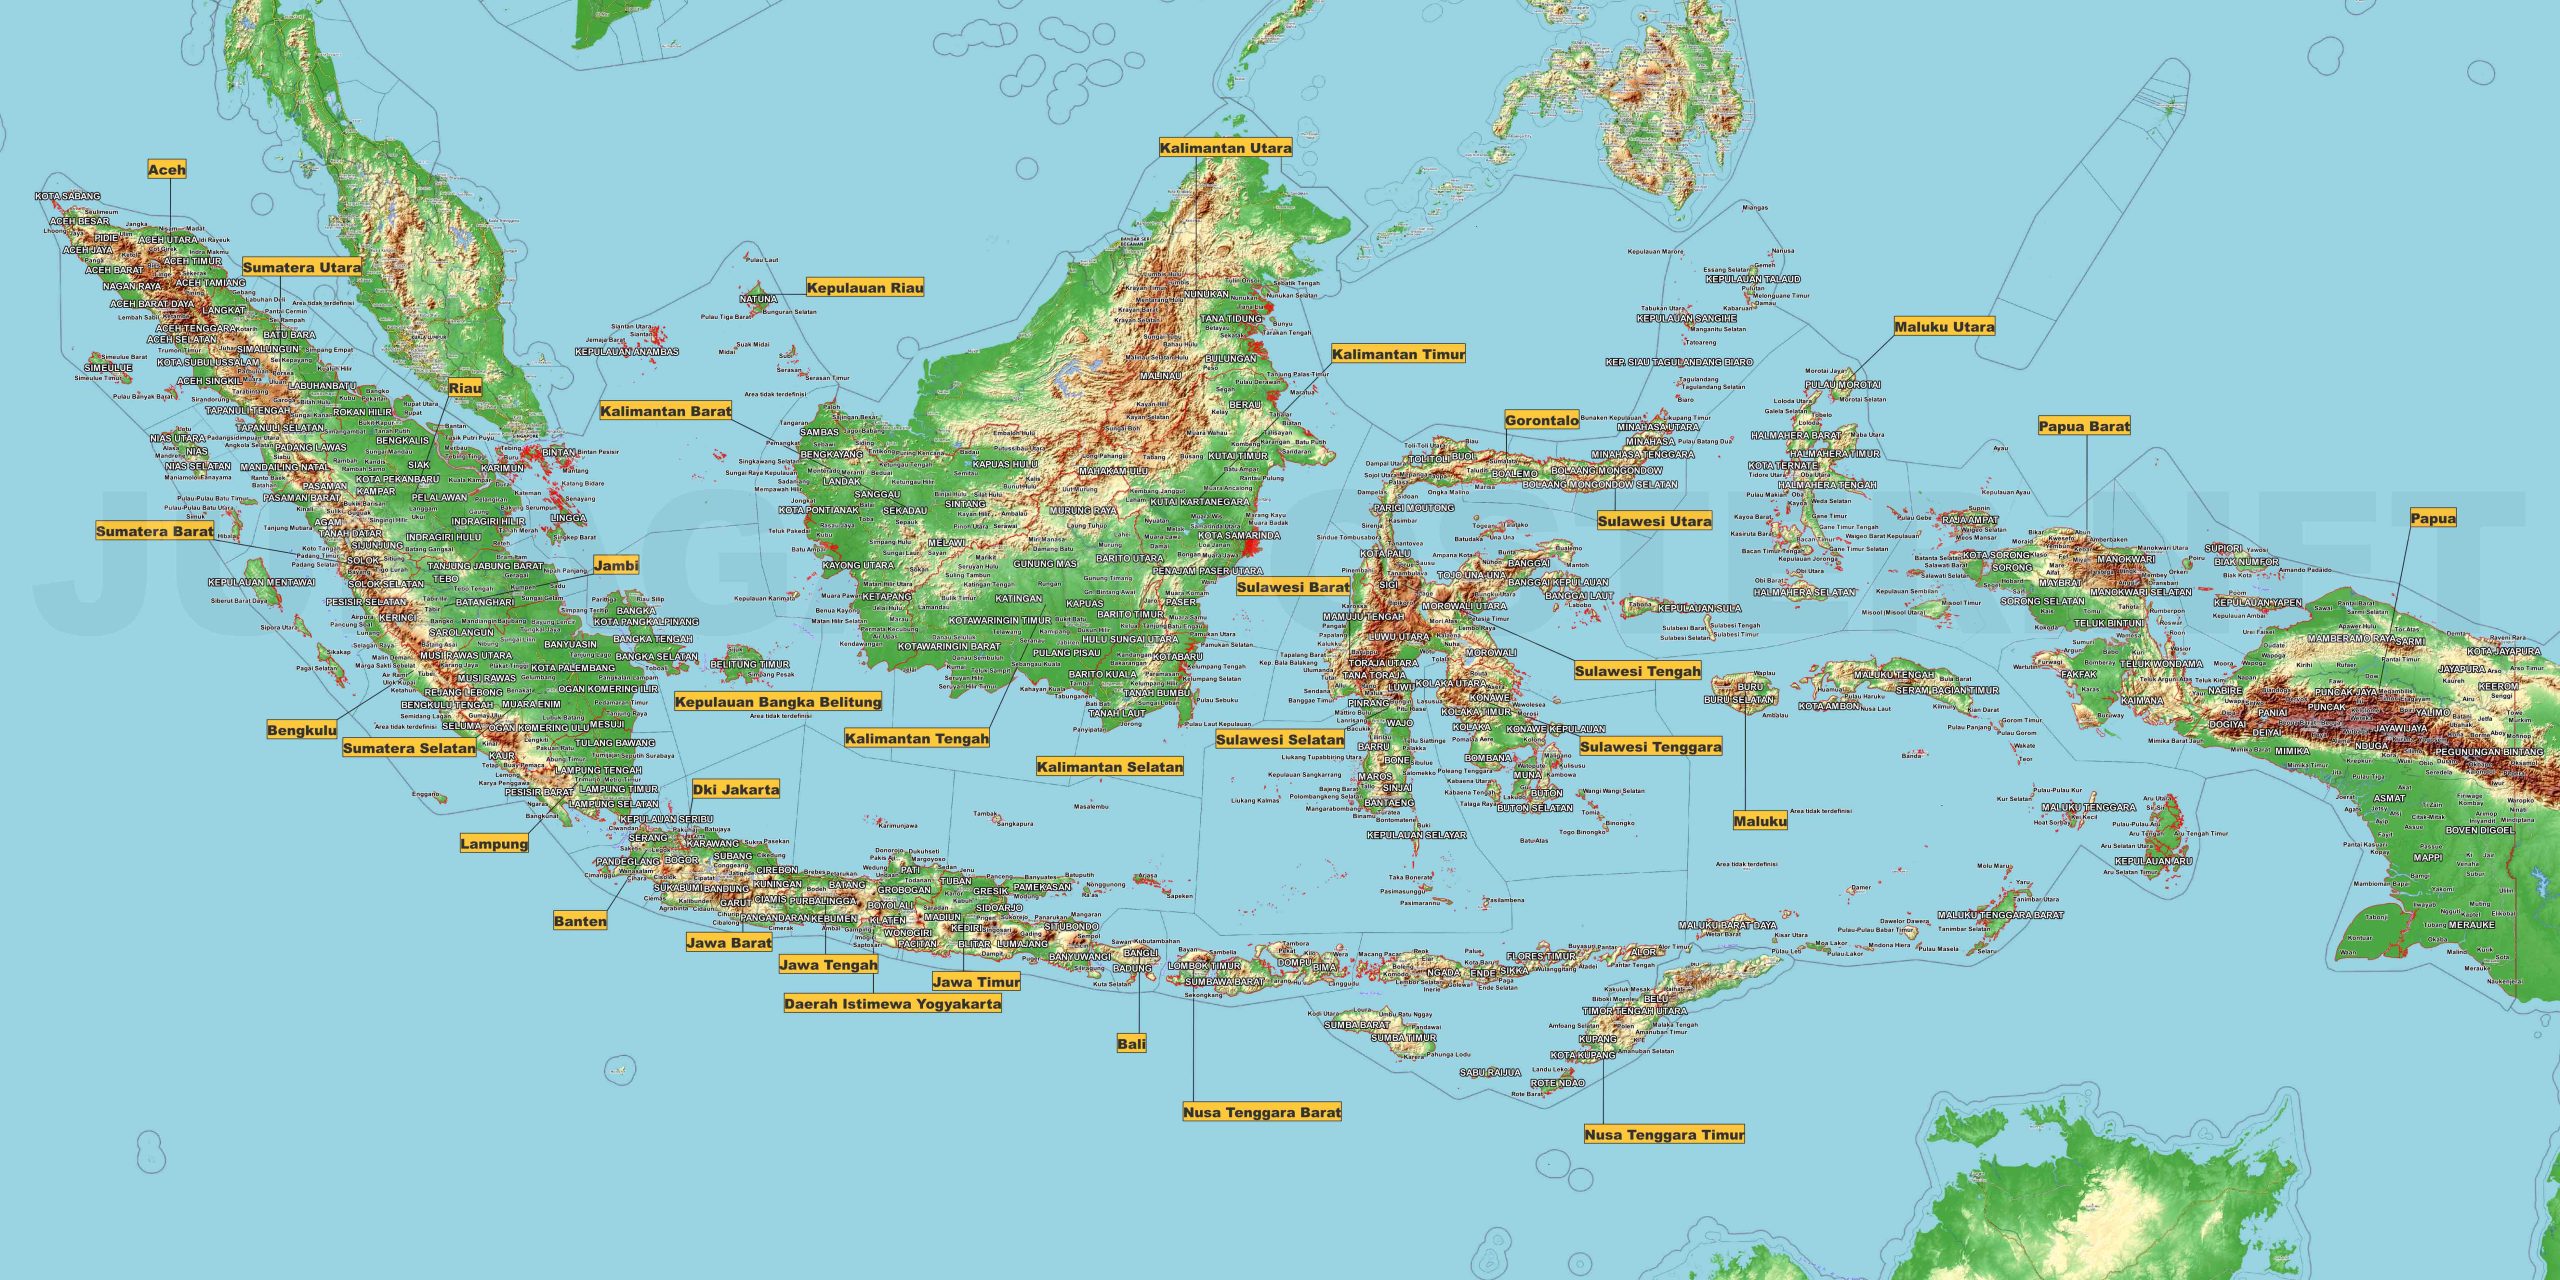 Peta Konsep Penjajahan Belanda di Indonesia: Membedah Lembaran Sejarah Kelam